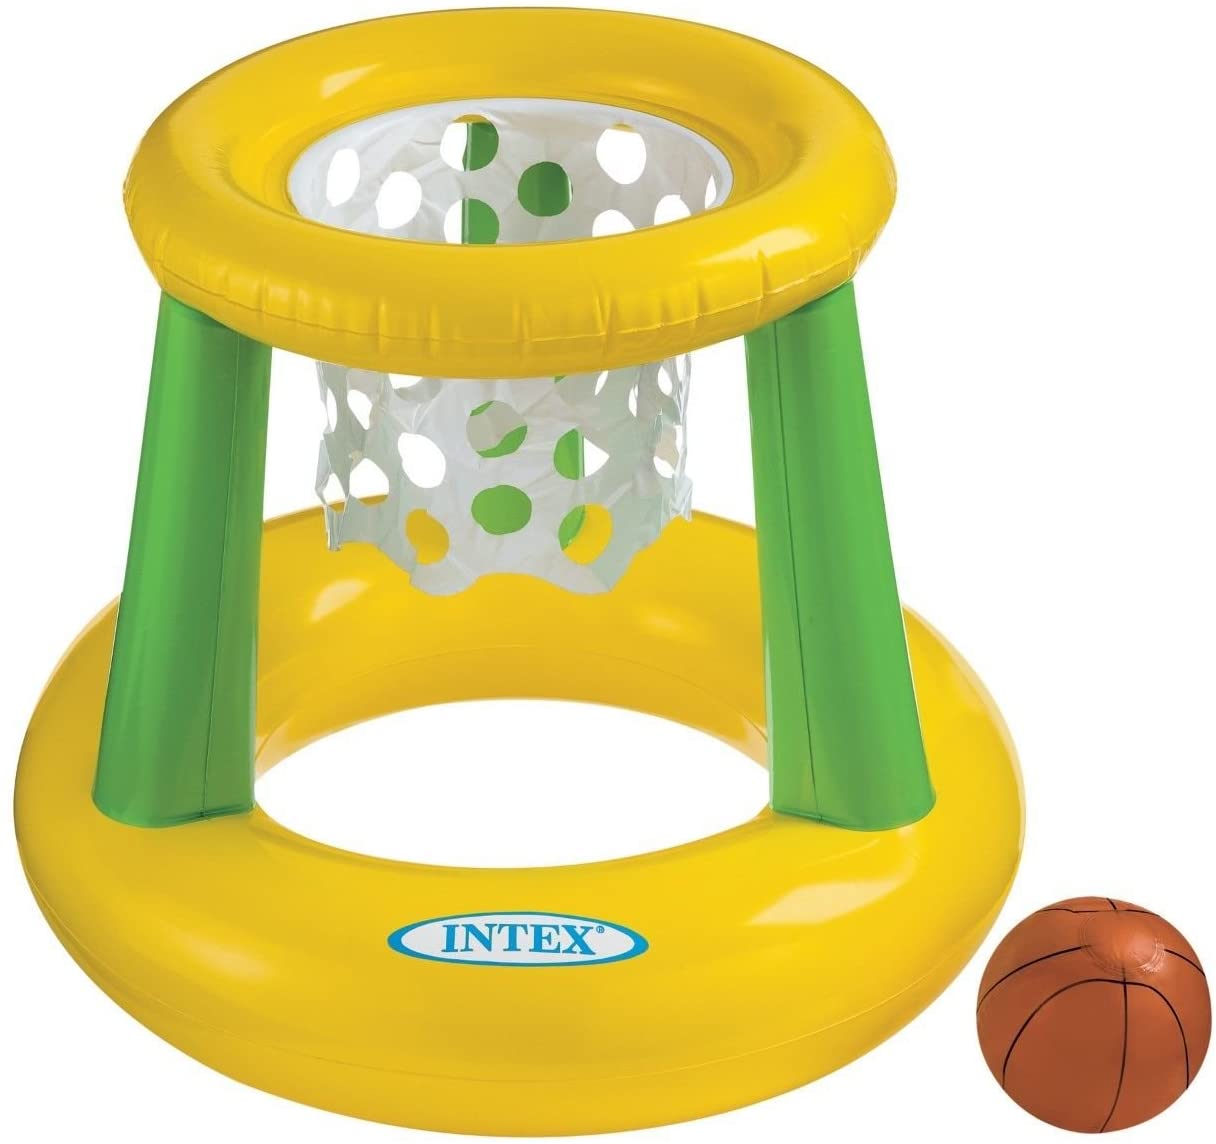 Intex Floating Basketball Hoops 3